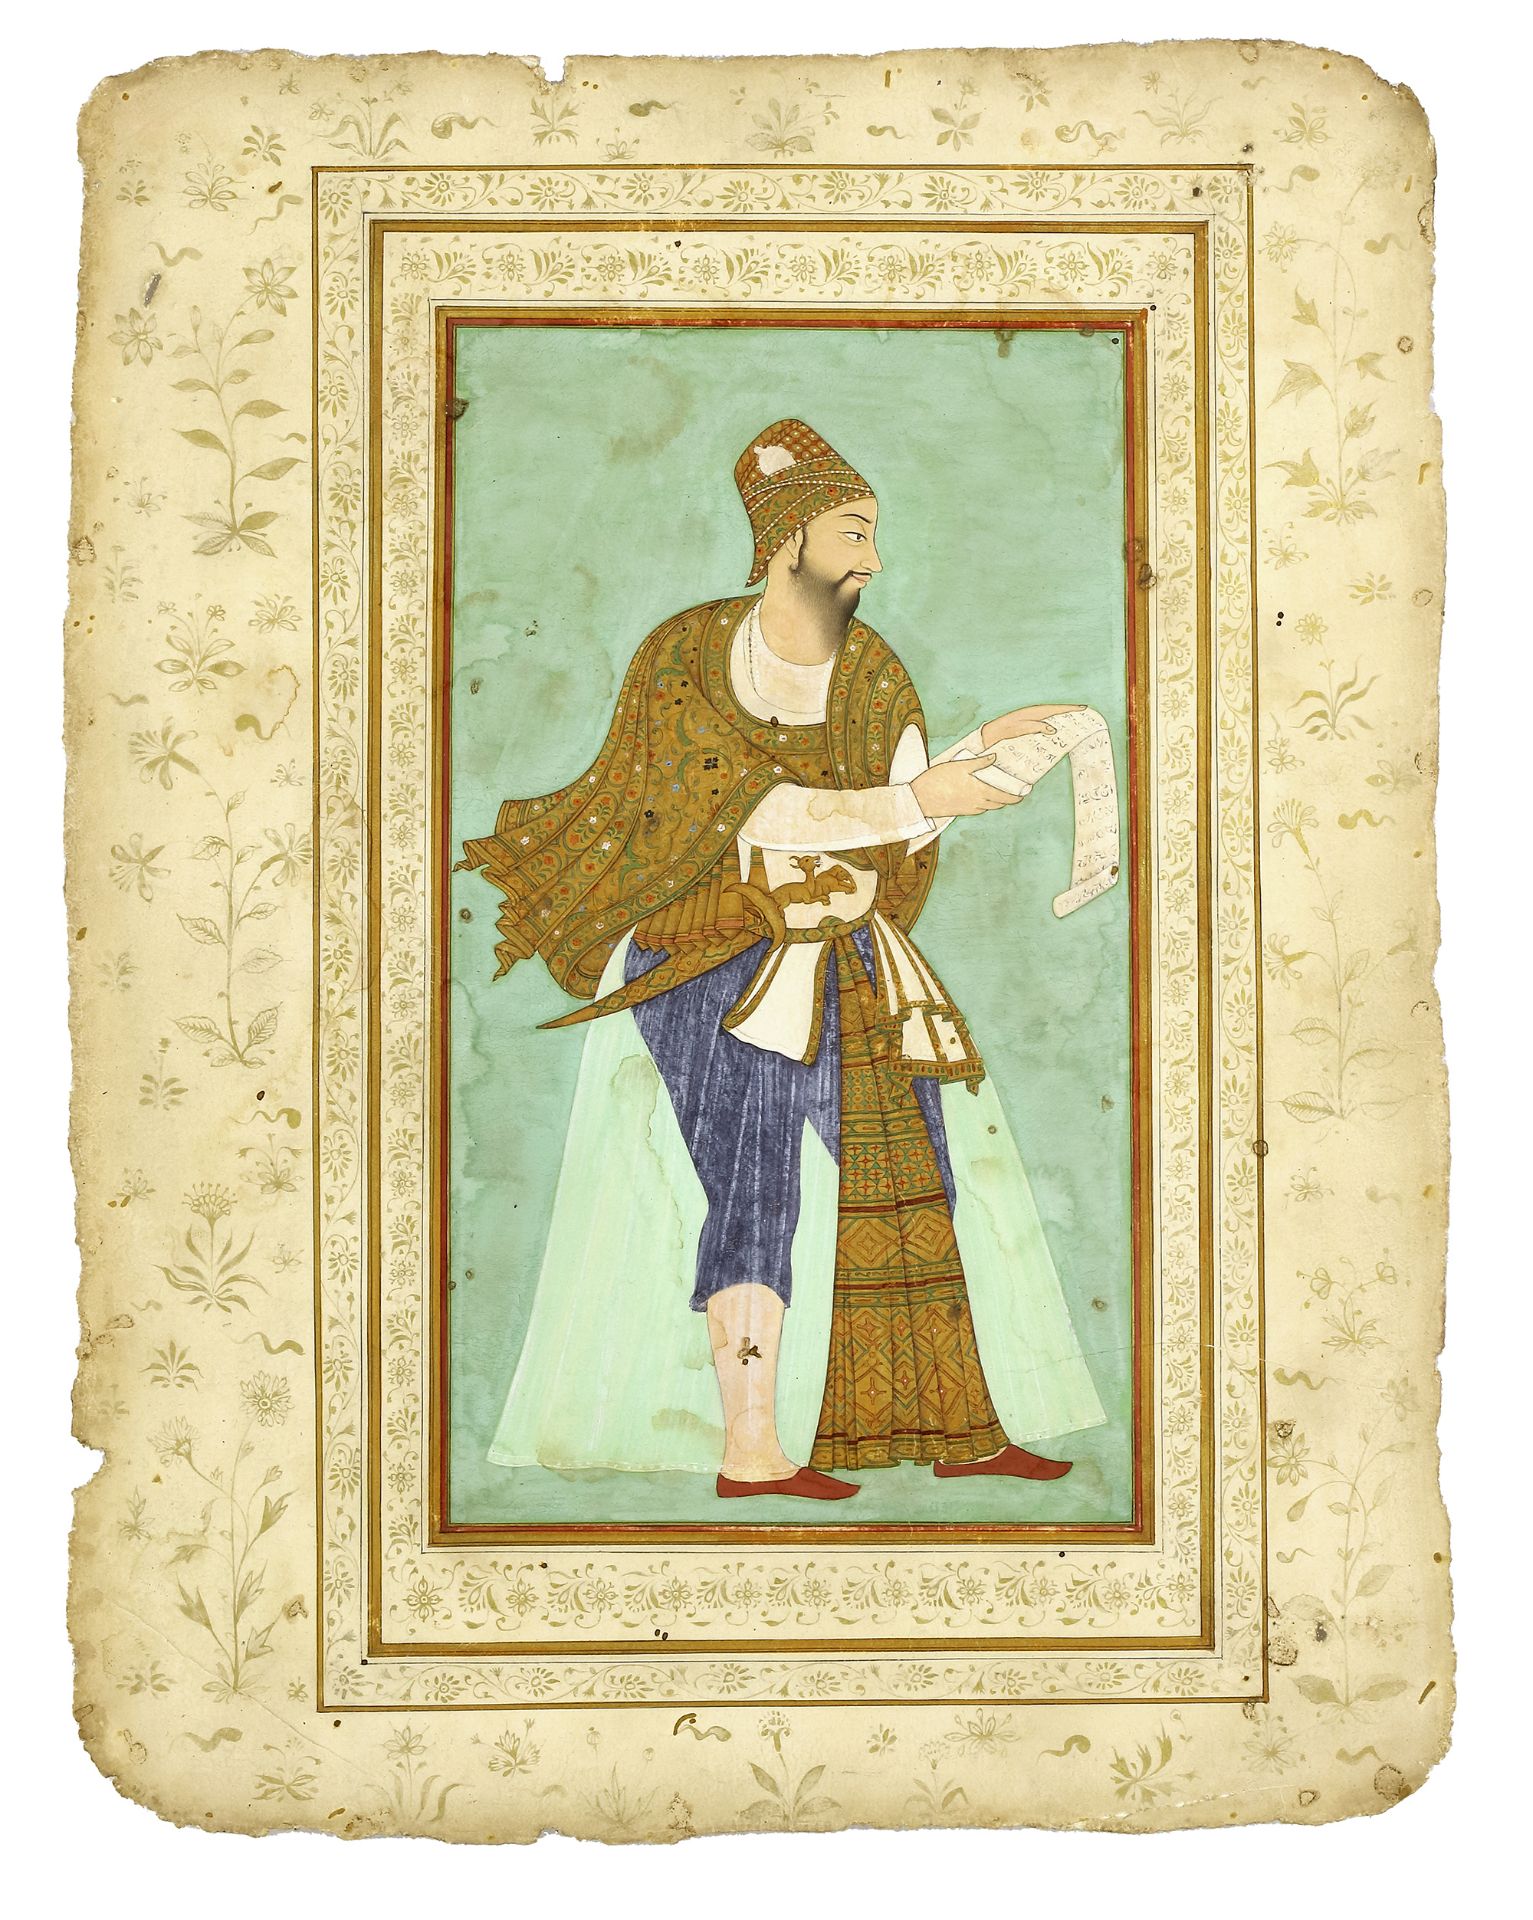 SULTAN 'ALI 'ADIL SHAH OF BIJAPUR (R. 1557-79), INDIA, DECCAN, BIJAPUR, CIRCA 18TH OR 19TH CENTURY - Image 2 of 4